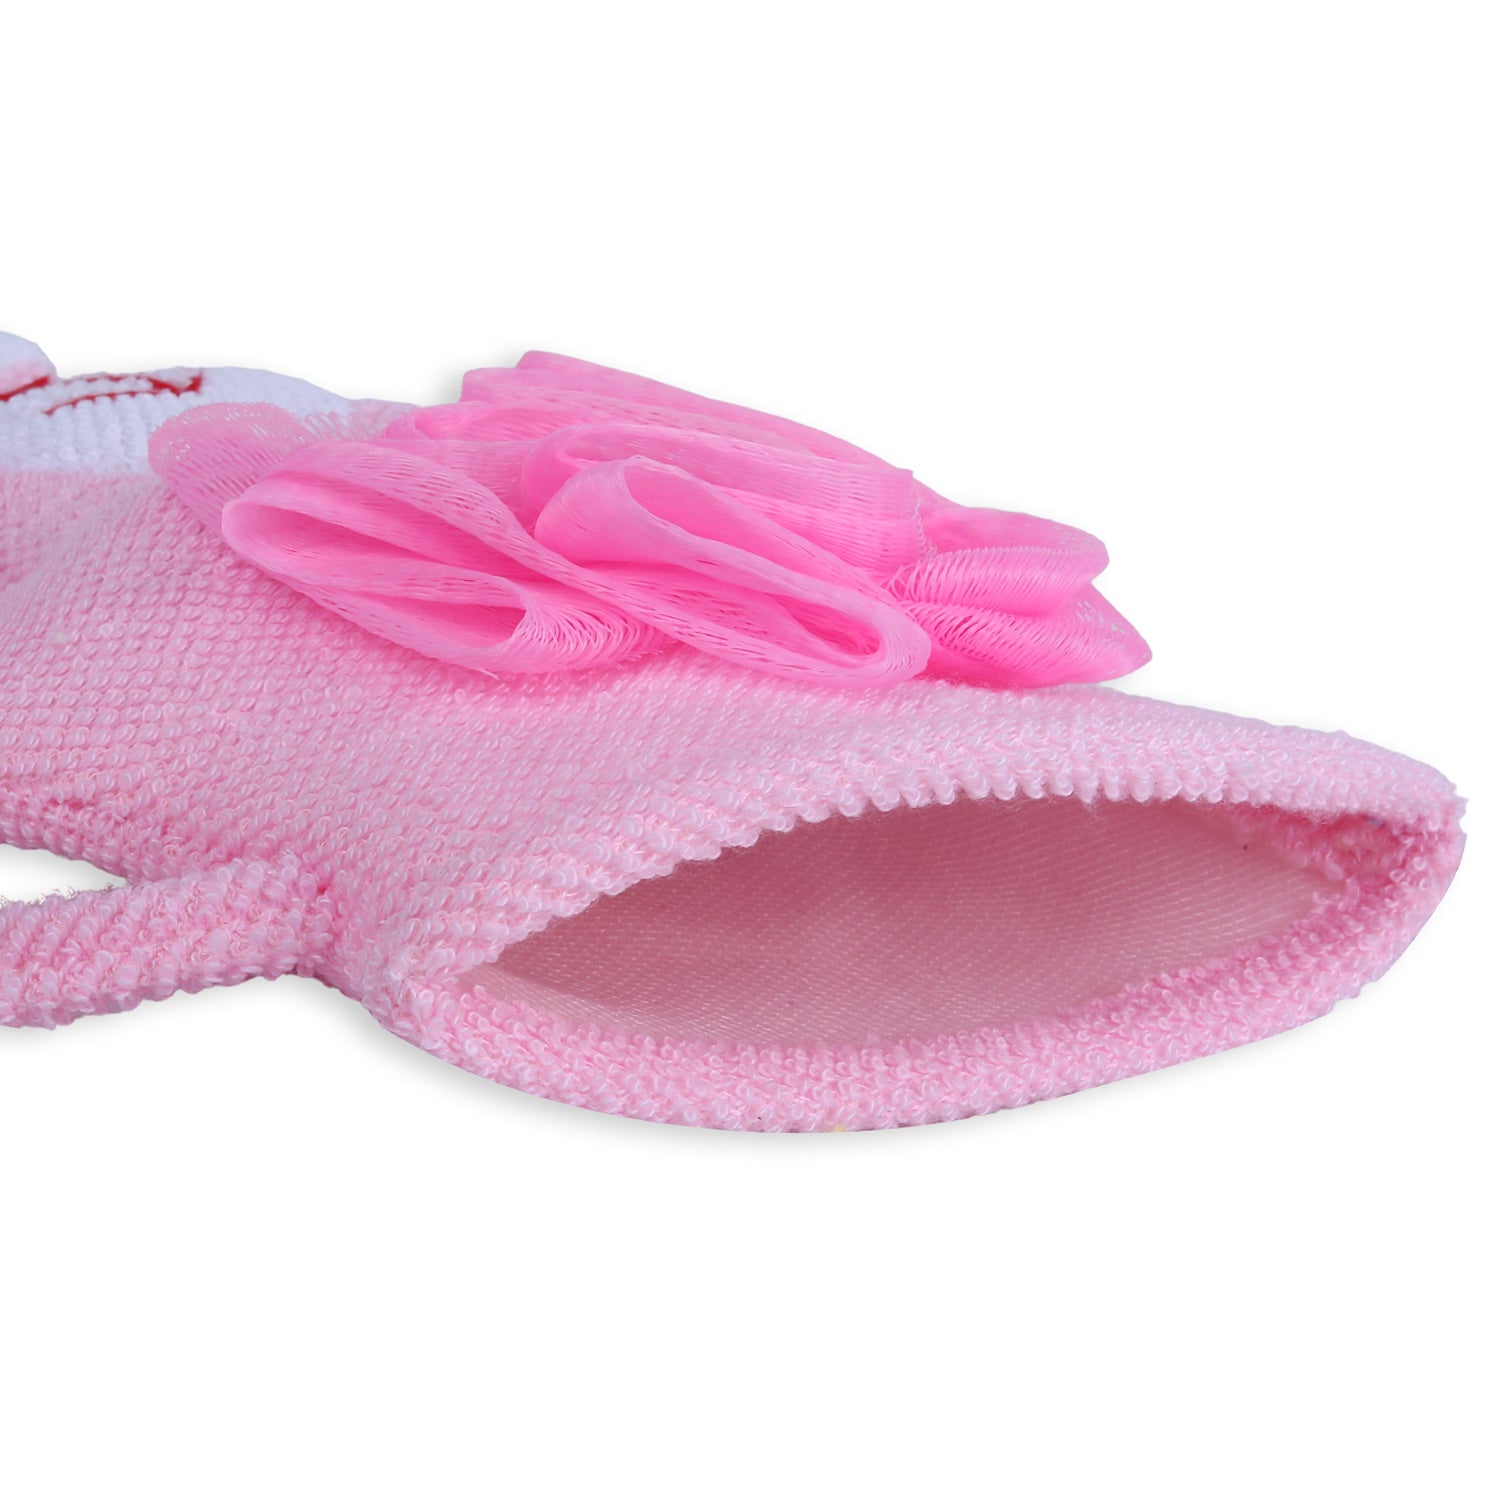 Baby Moo Naughty Rabbit Bath Time Fun Hand Puppet Loofah Bath Glove - Pink - Baby Moo